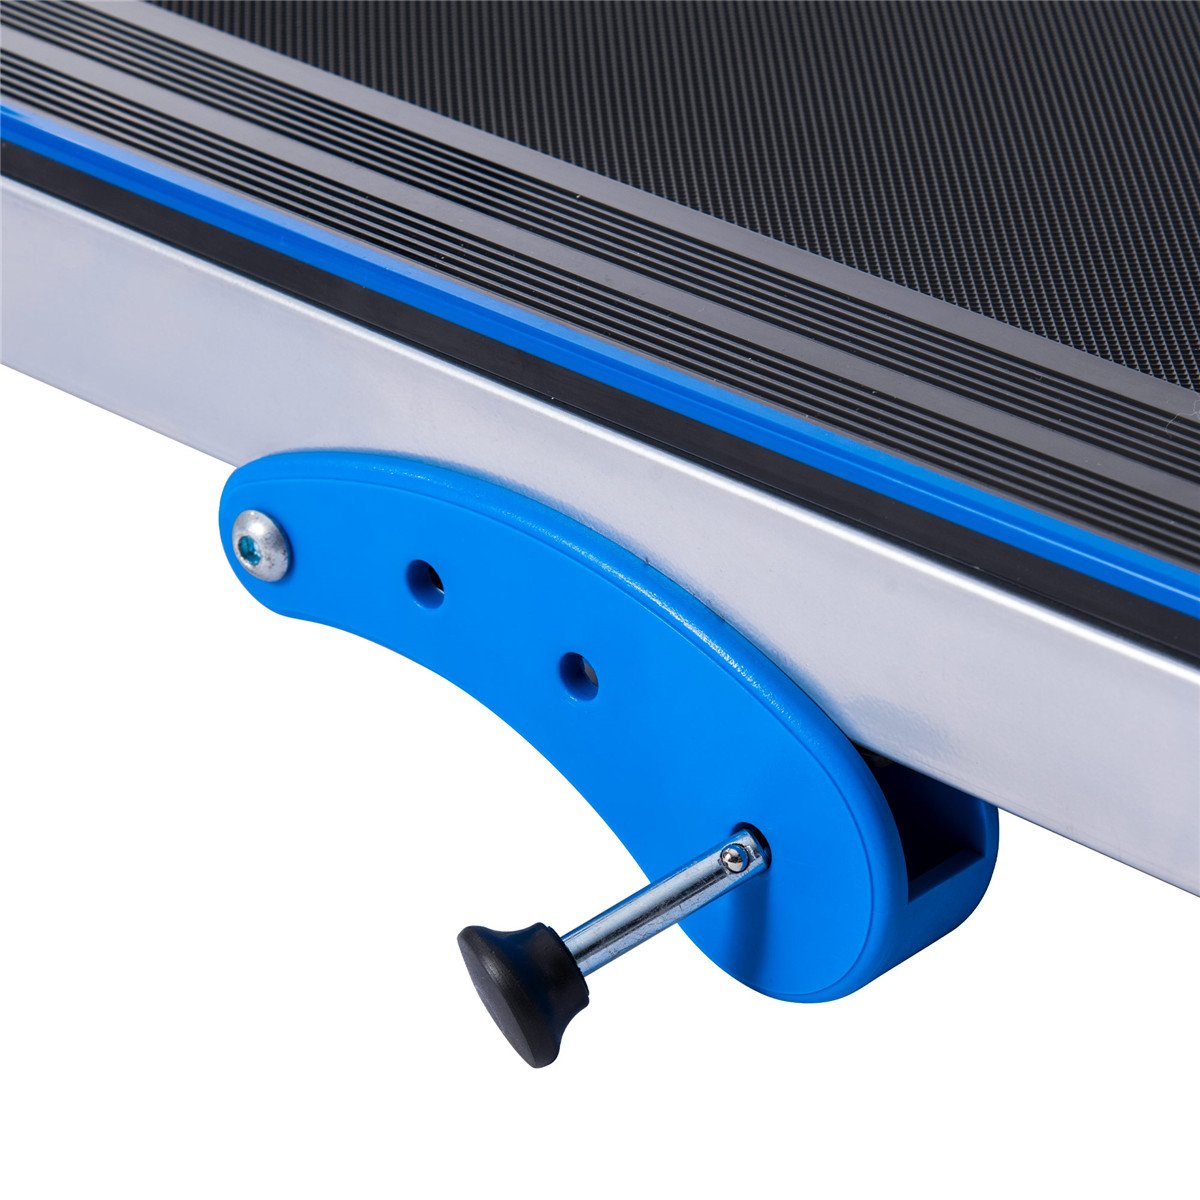 Electric Folding Treadmill Motorized Running Machine | Device Holder | Audio Speaker